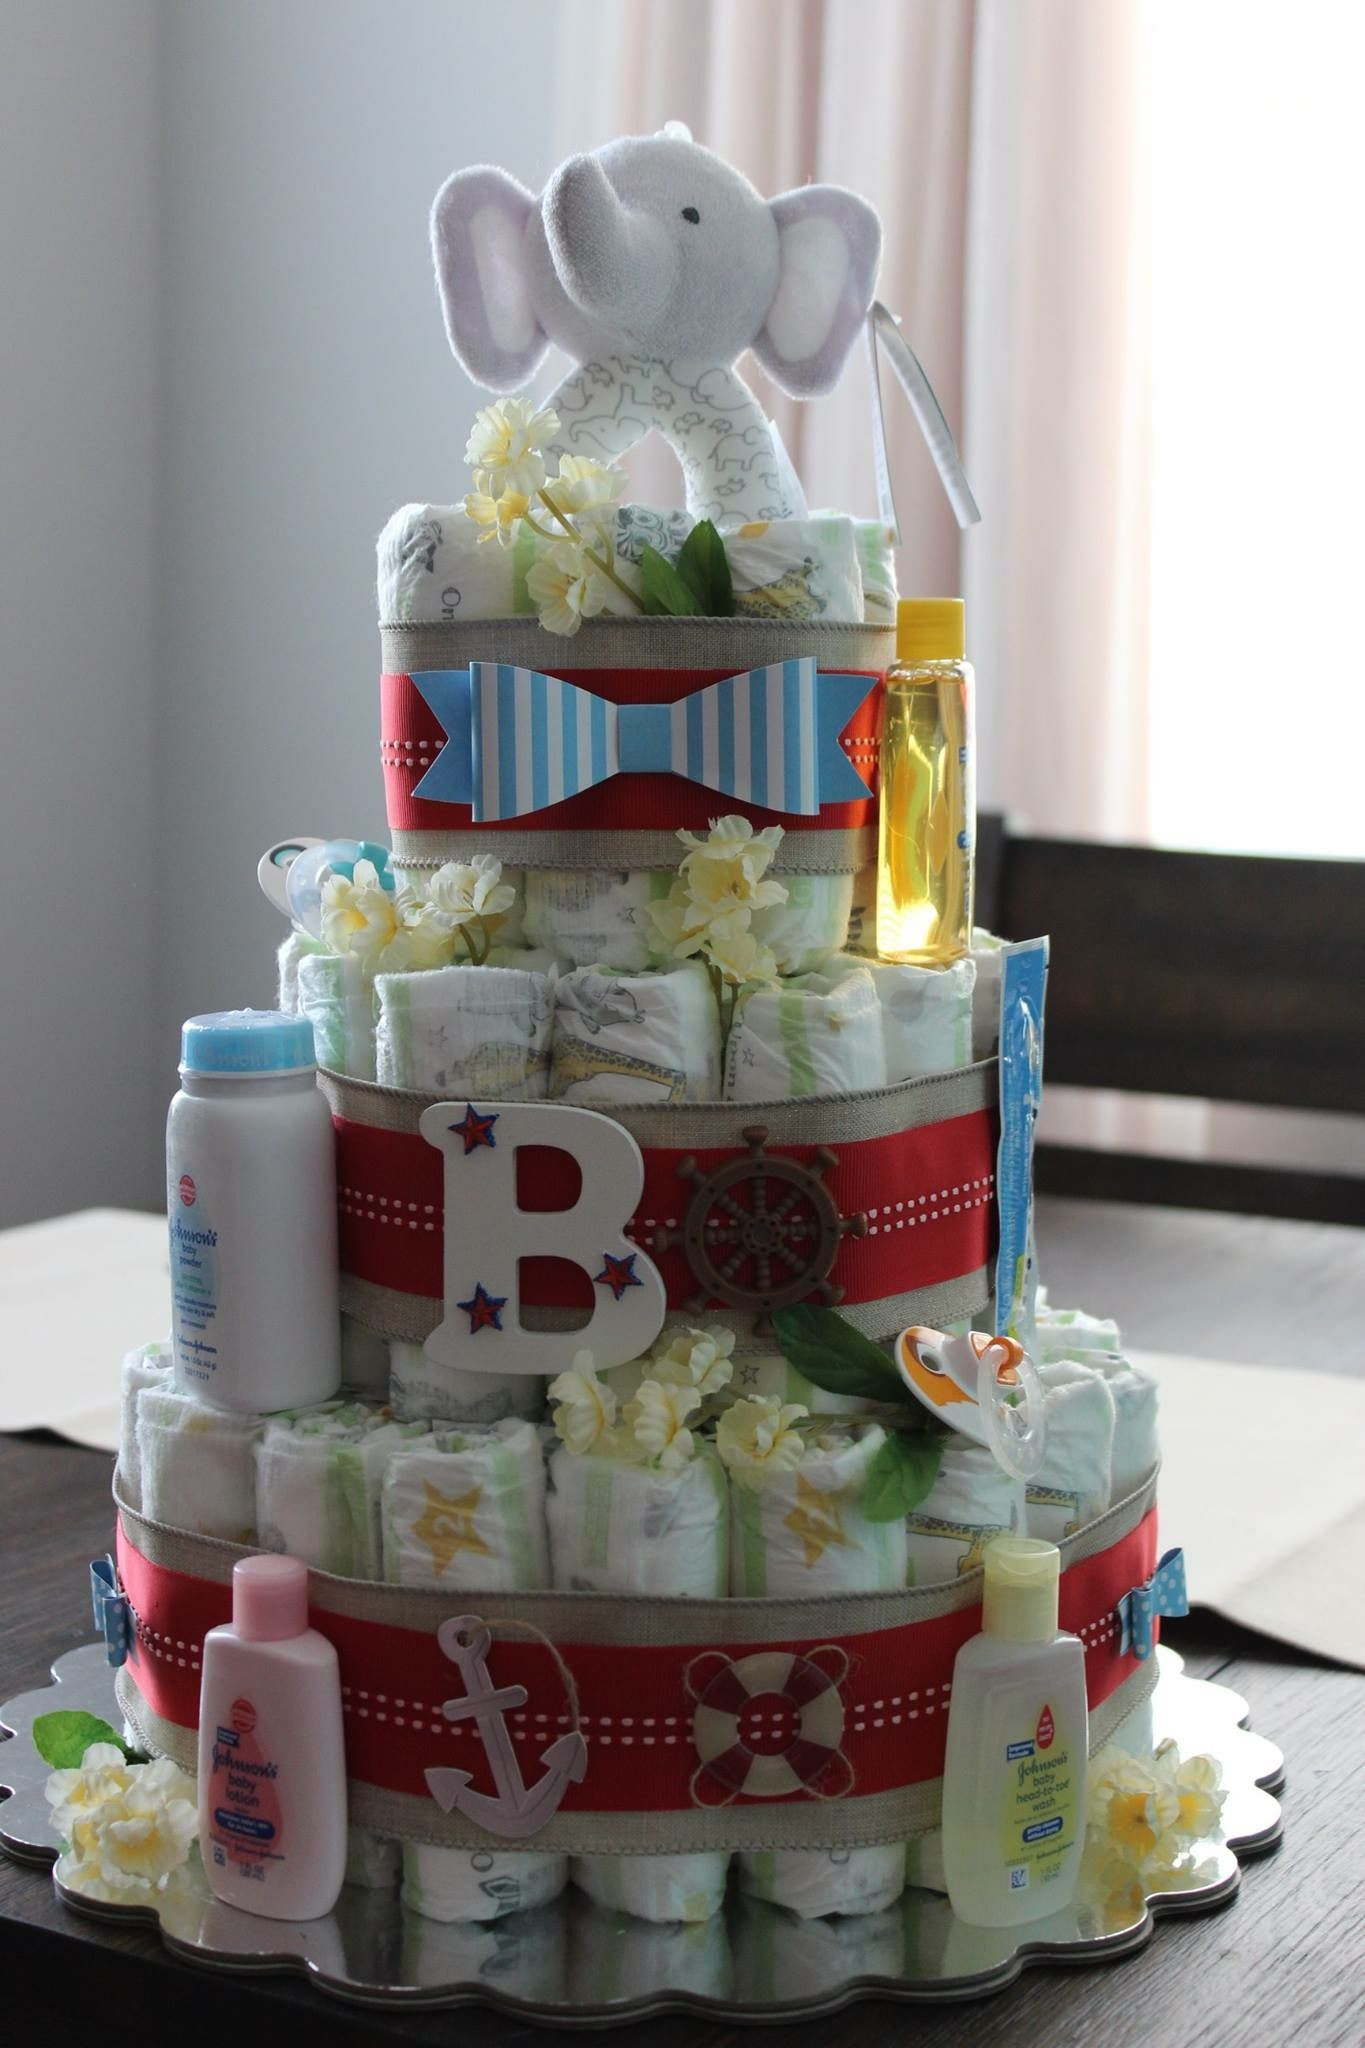 Nautical Baby Shower Gift Ideas
 Nautical diaper cake cordiallycreated